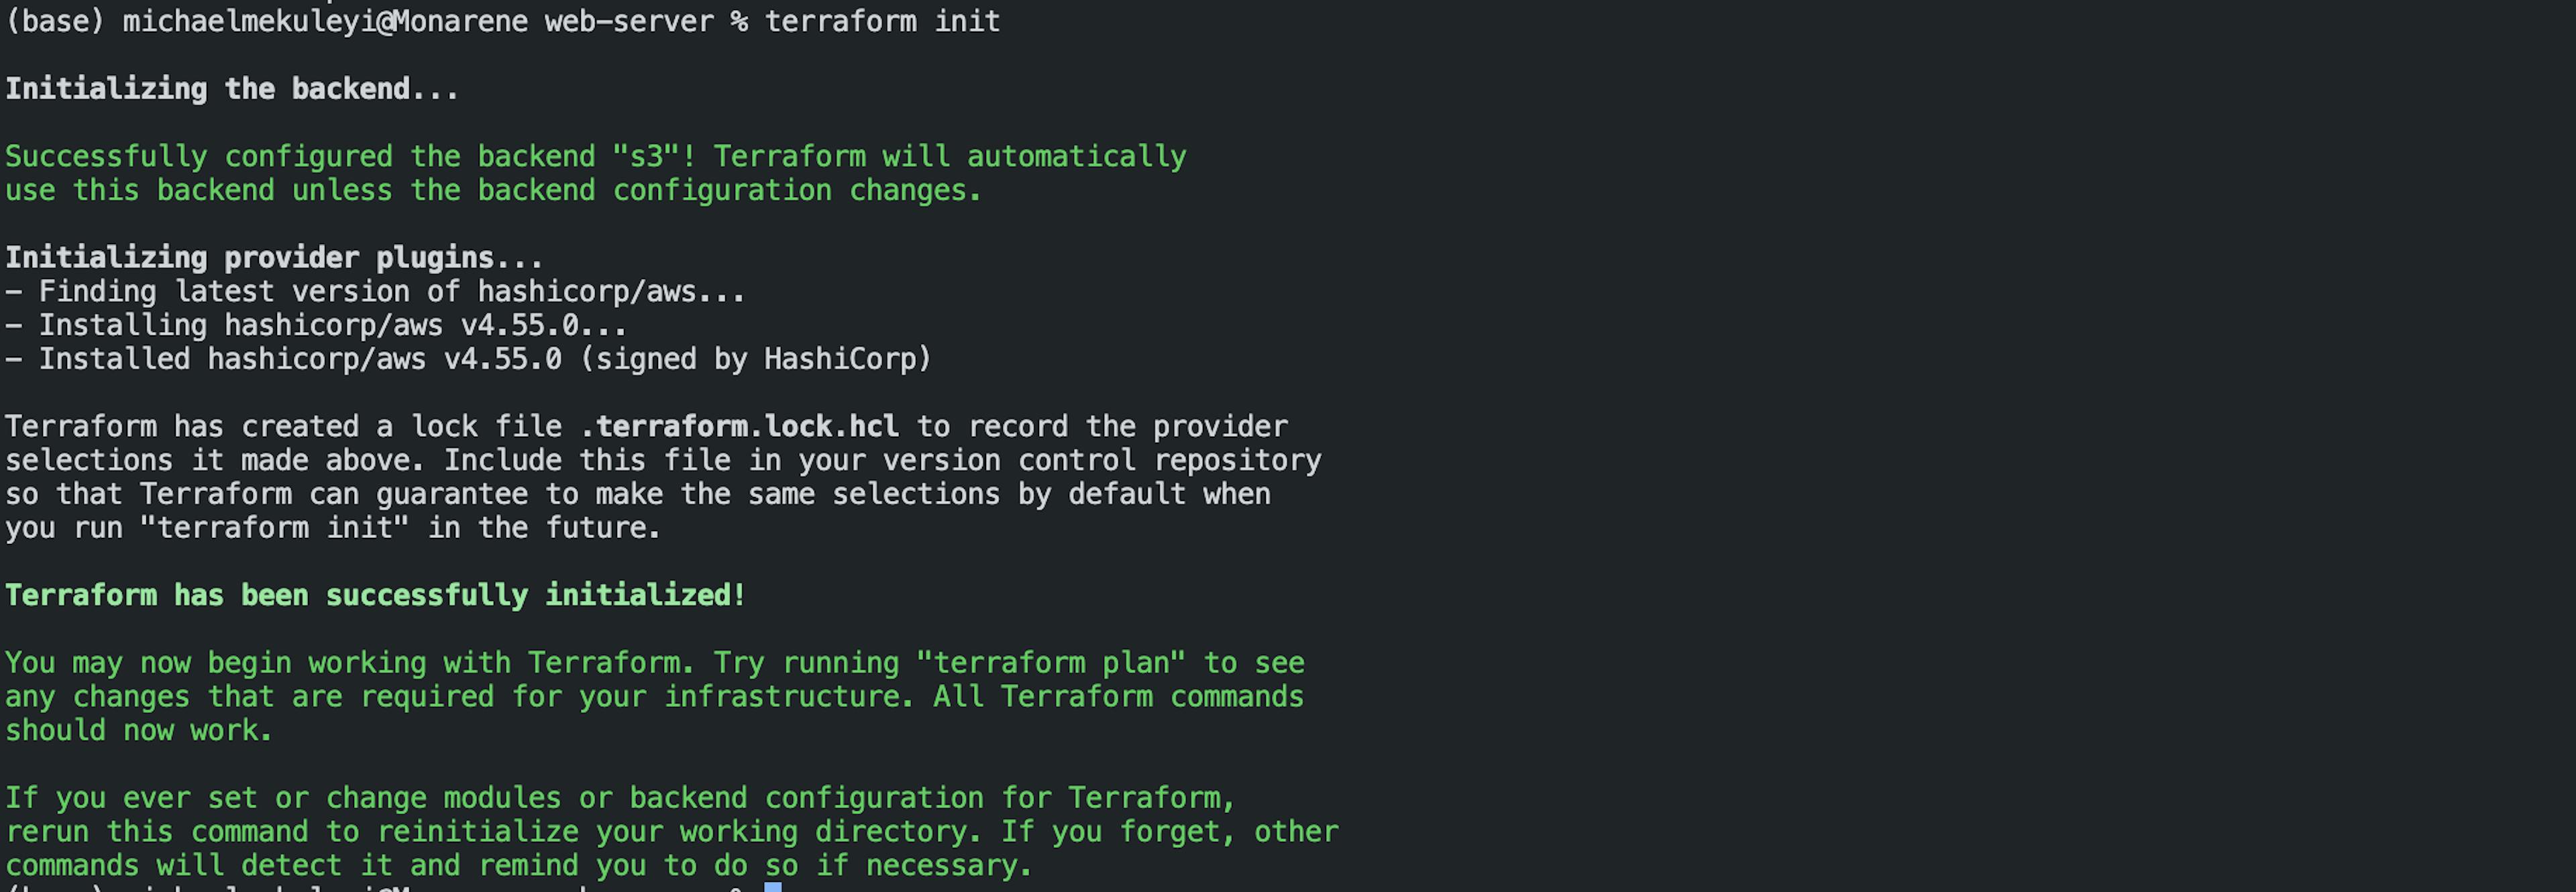 Running terraform init on the web-server configuration